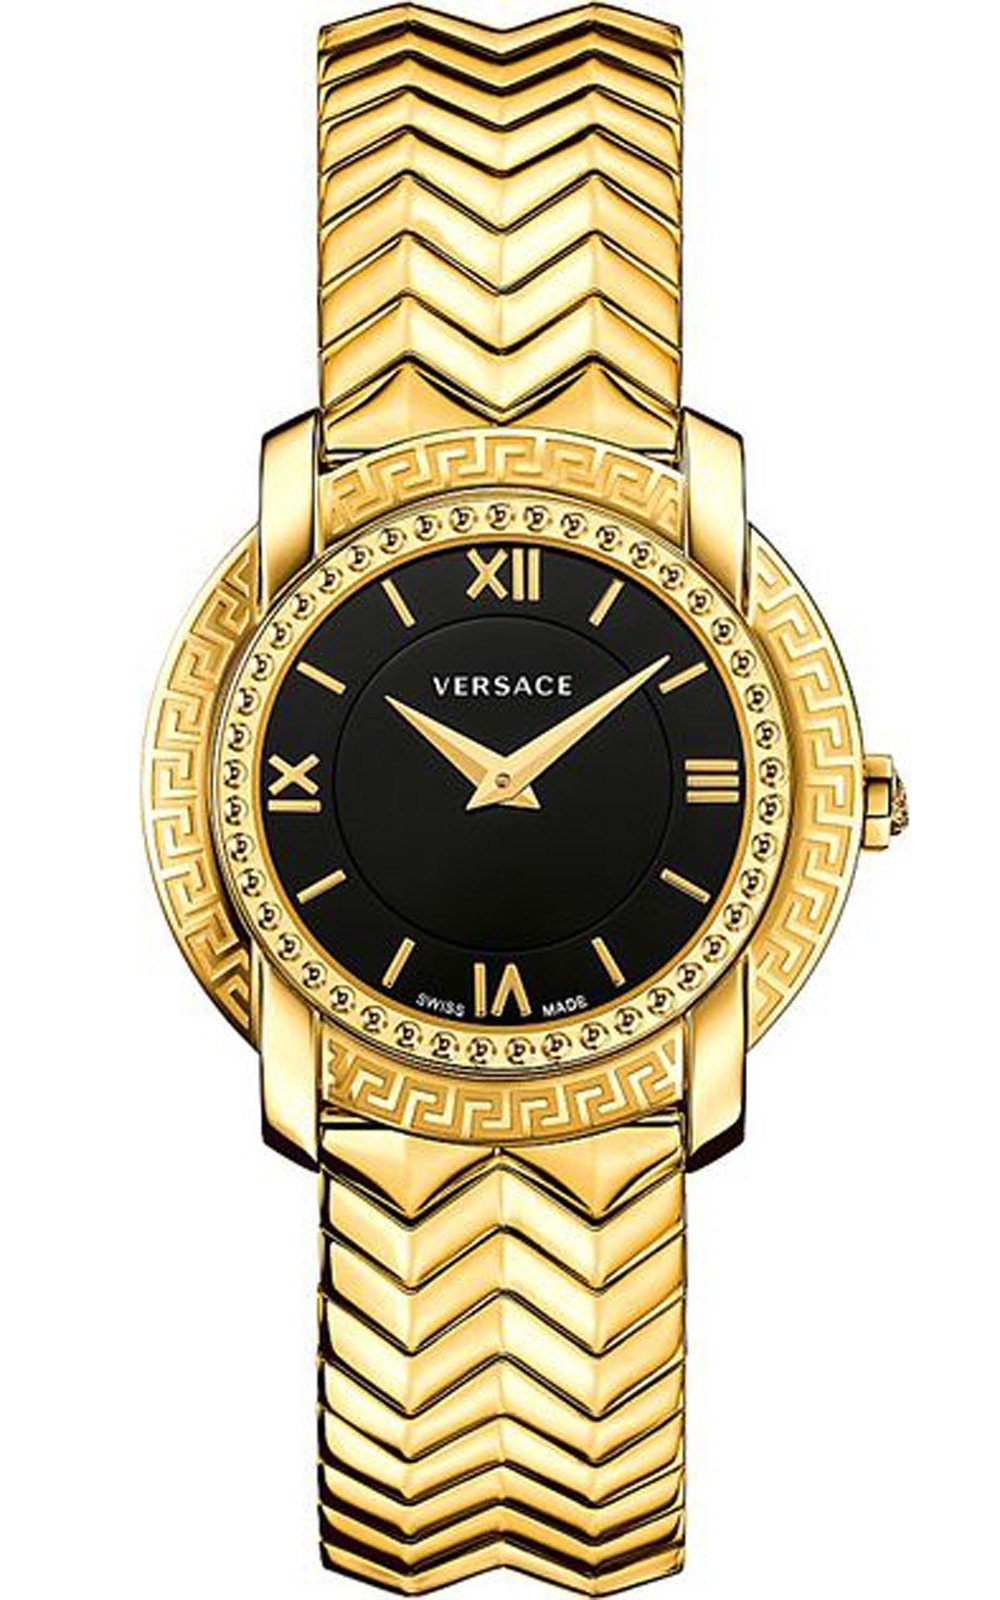 Đồng hồ Versace Women's DV25 Gold-Tone 